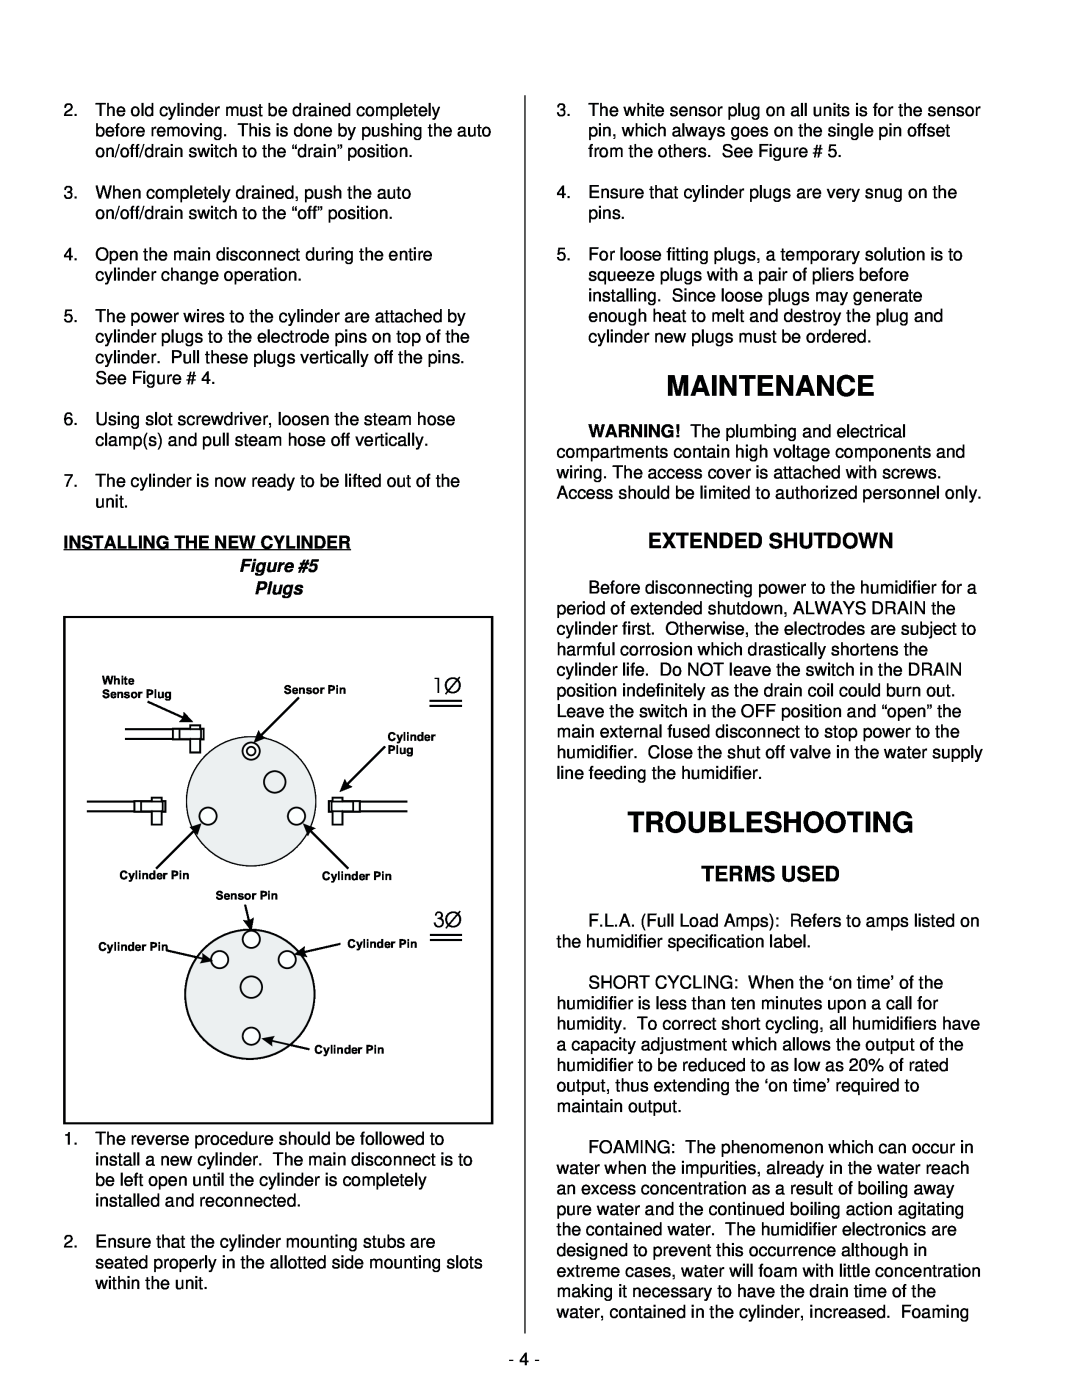 Nortec Industries MES-U manual Maintenance, Troubleshooting, Extended Shutdown, Terms Used, Figure #5, Plugs 